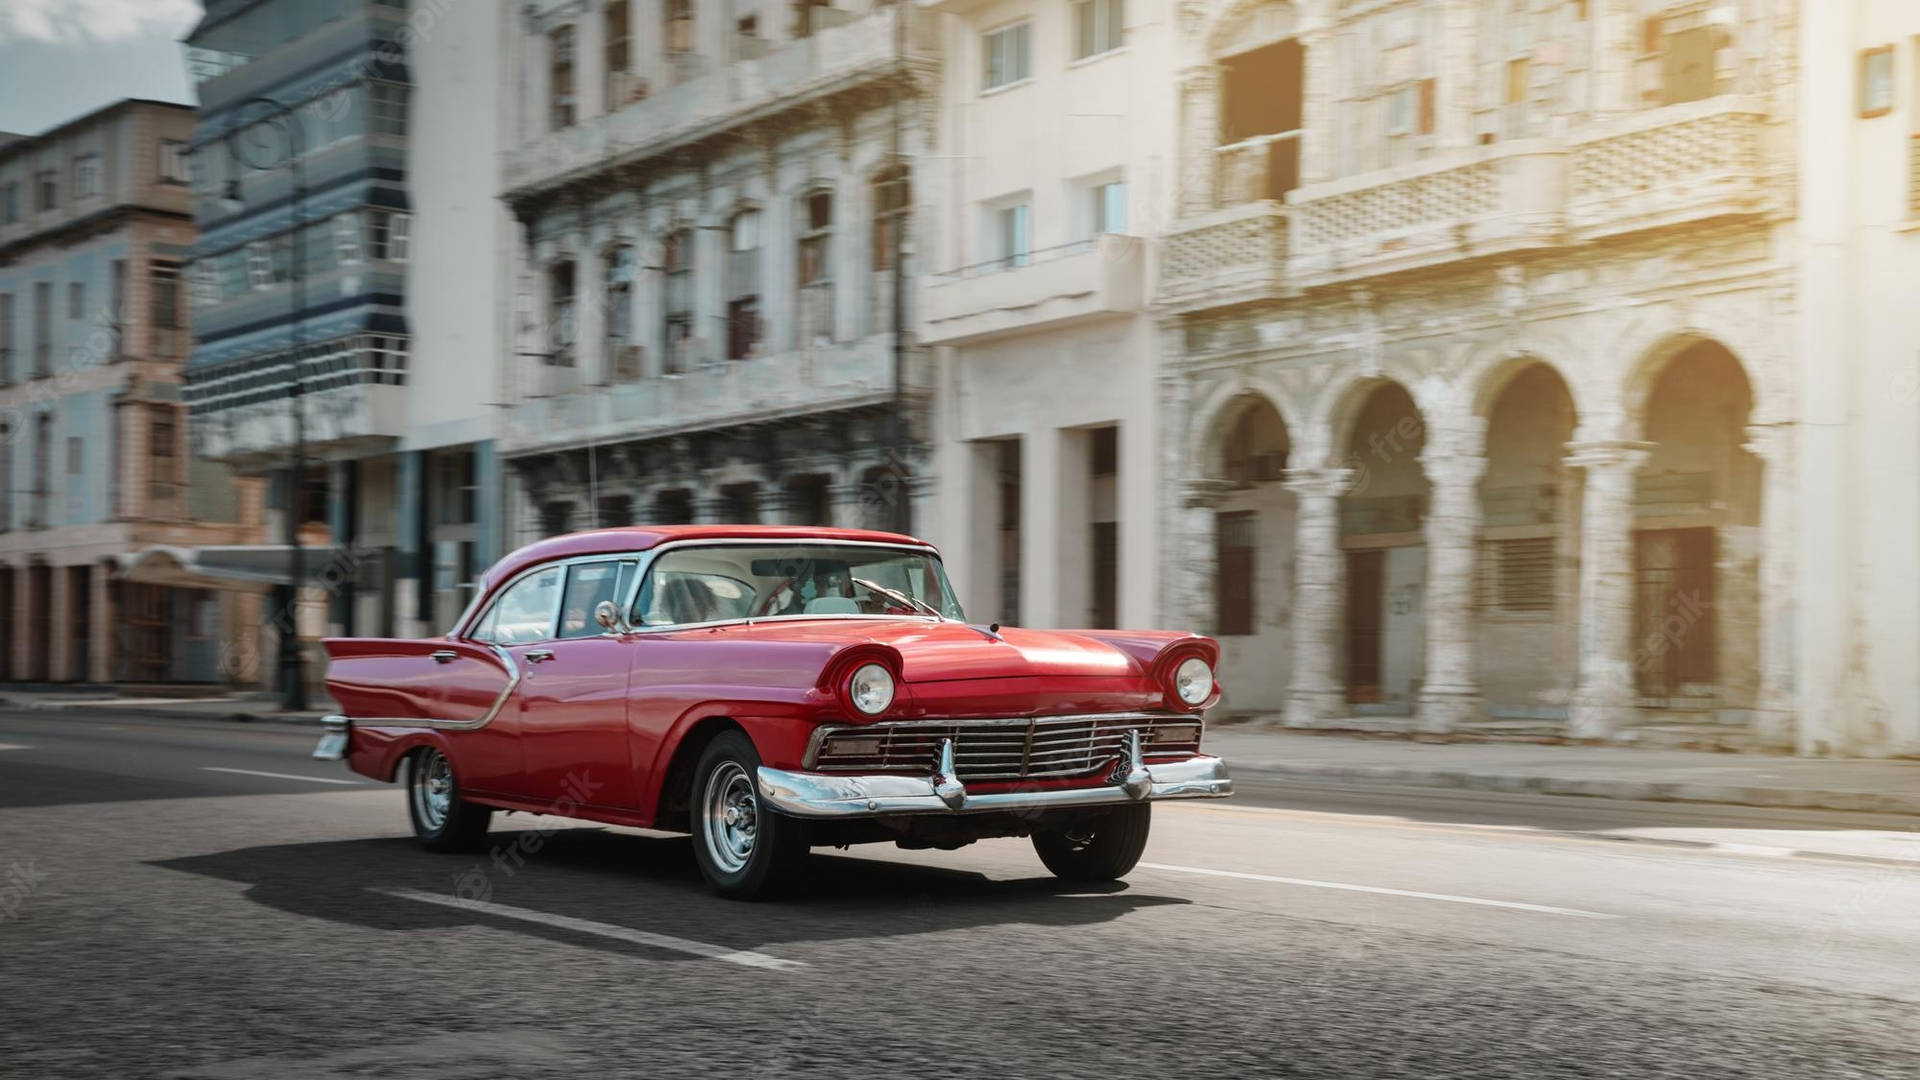 Havana Vintage Car 3D Render Wallpaper